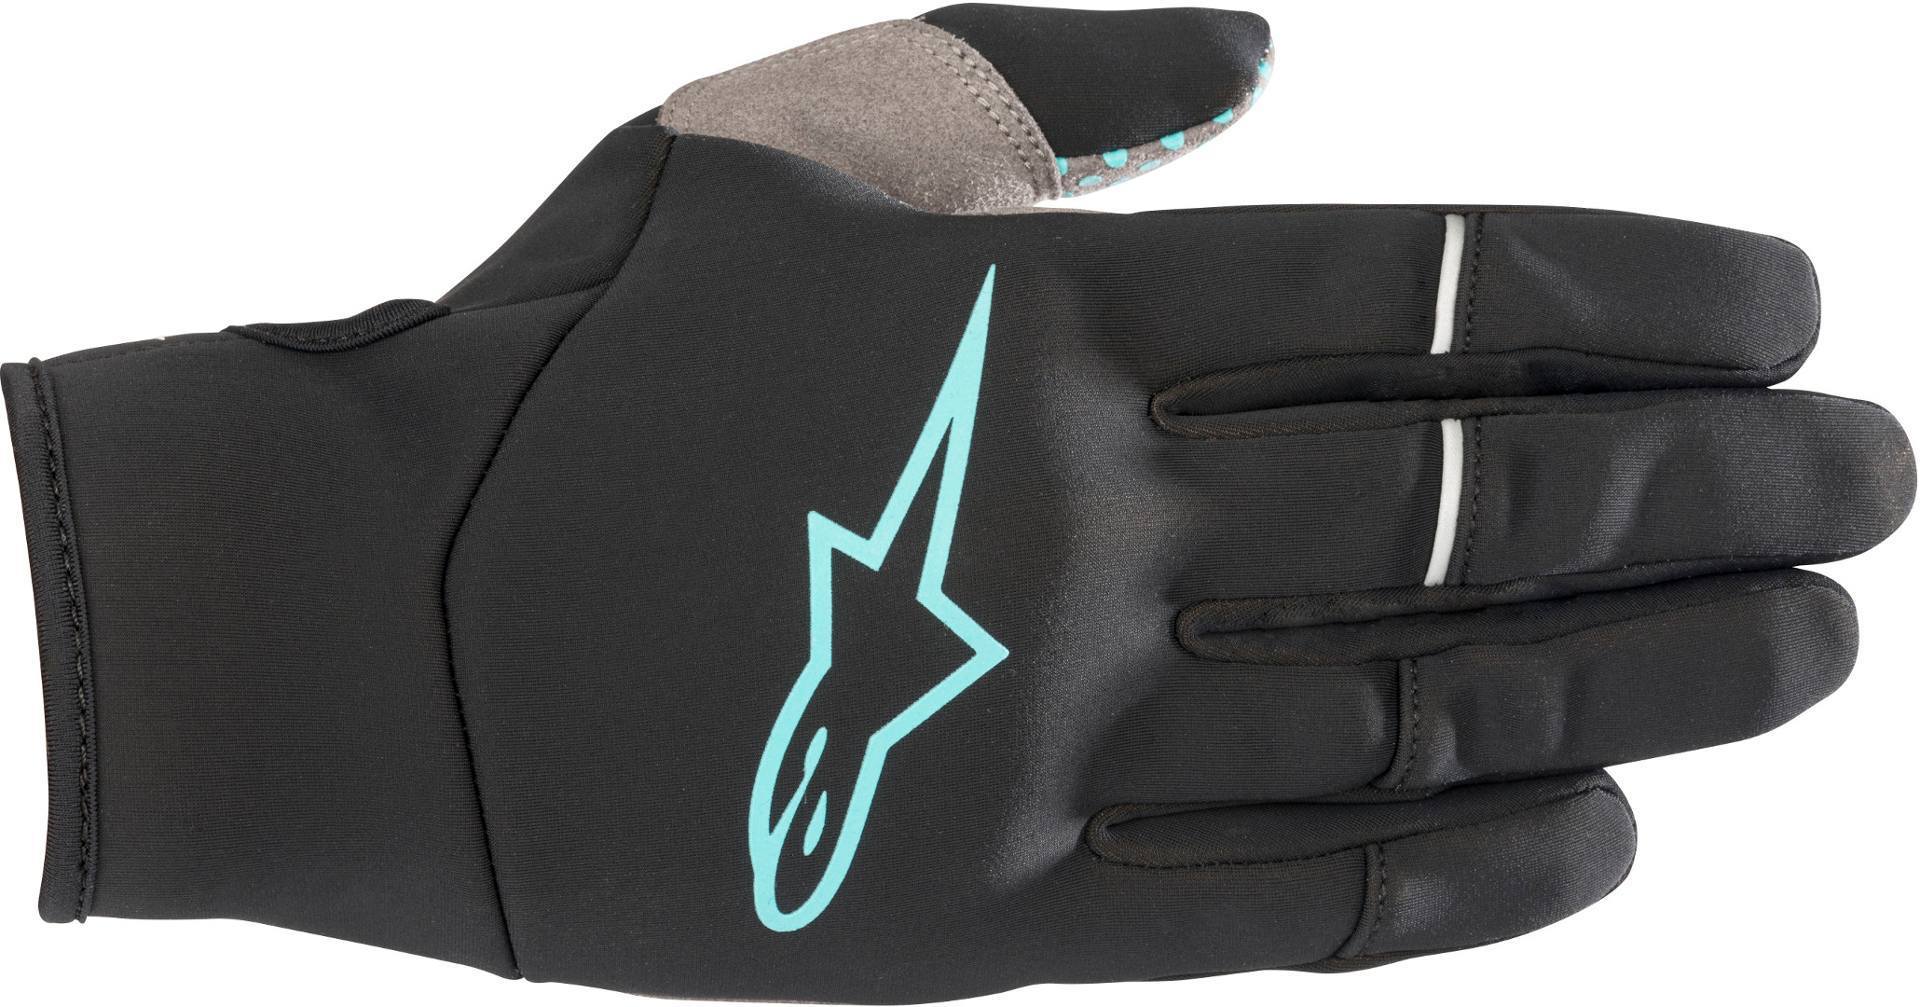 Alpinestars Aspen Pro Waterproof Bicycle Gloves, black-blue, Size XS, black-blue, Size XS